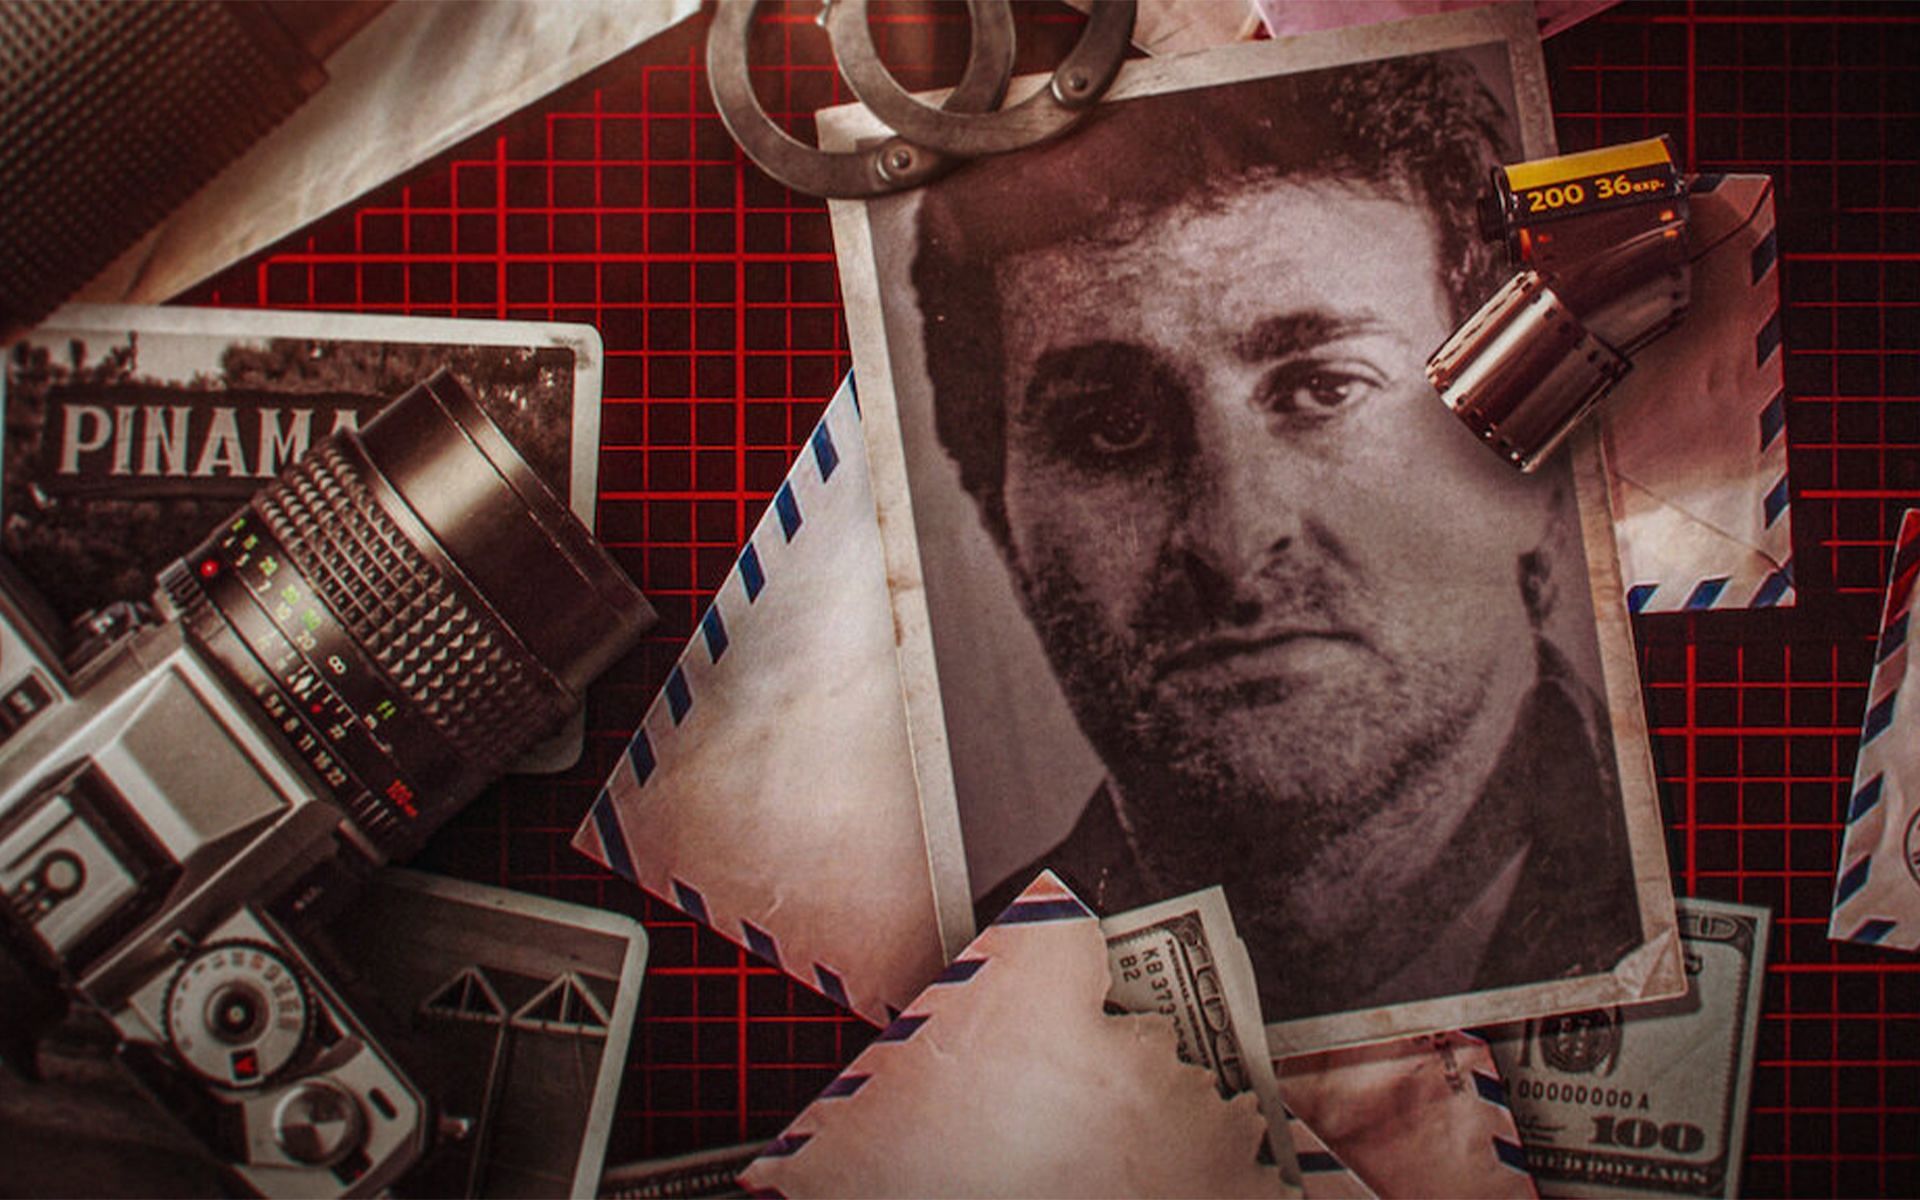 The Photographer: Murder in Pinamar (Image via Netflix)